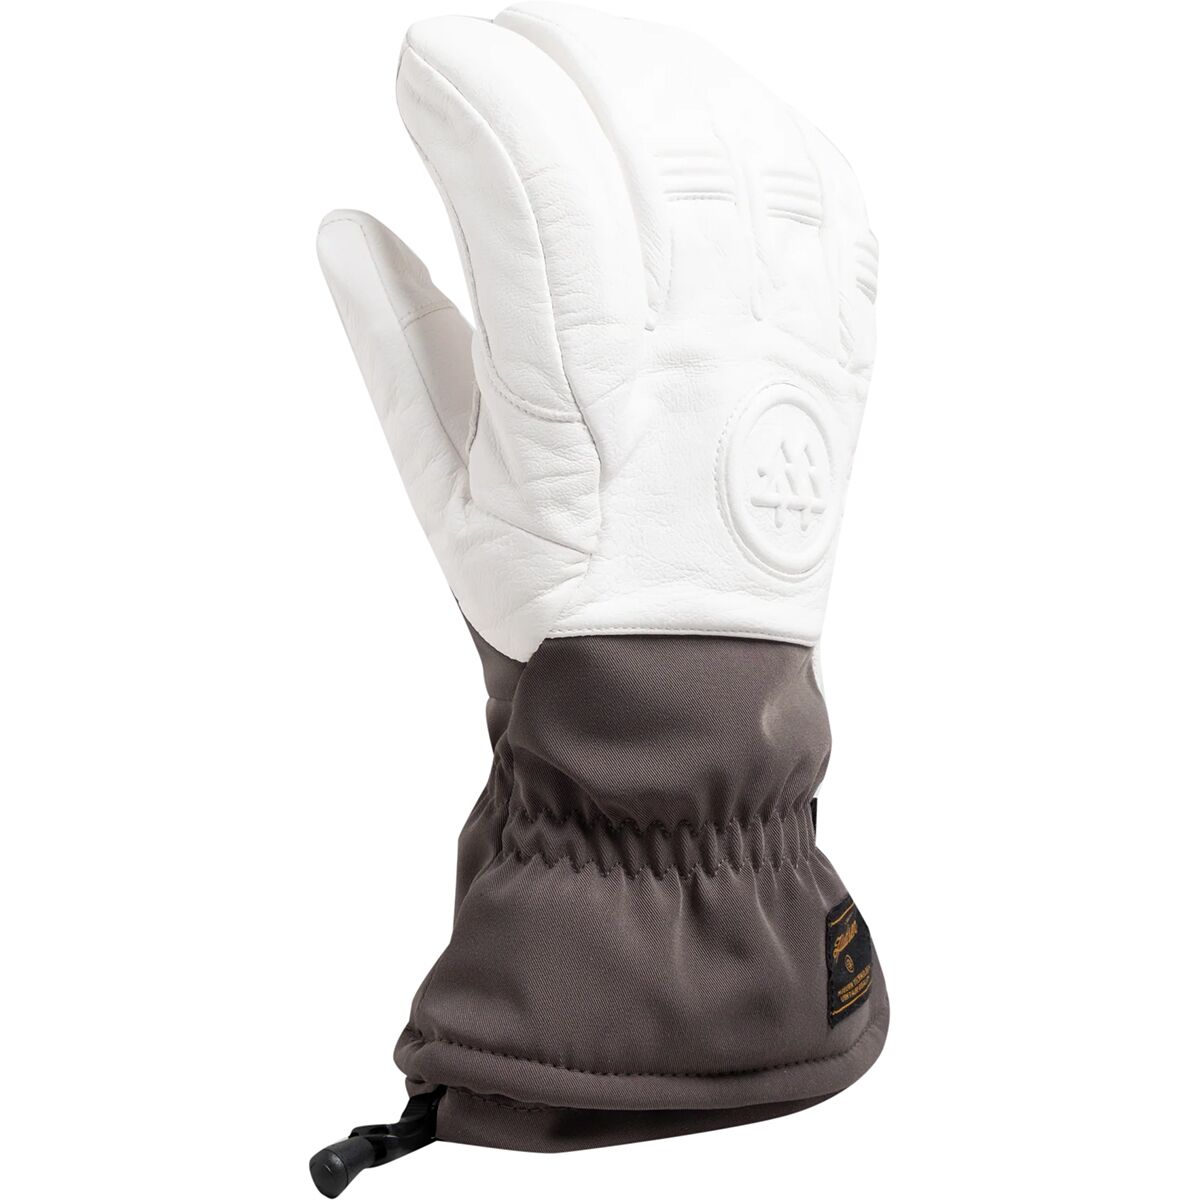 Swany Skylar 2.1 Glove - Men's Charcoal Grey/White